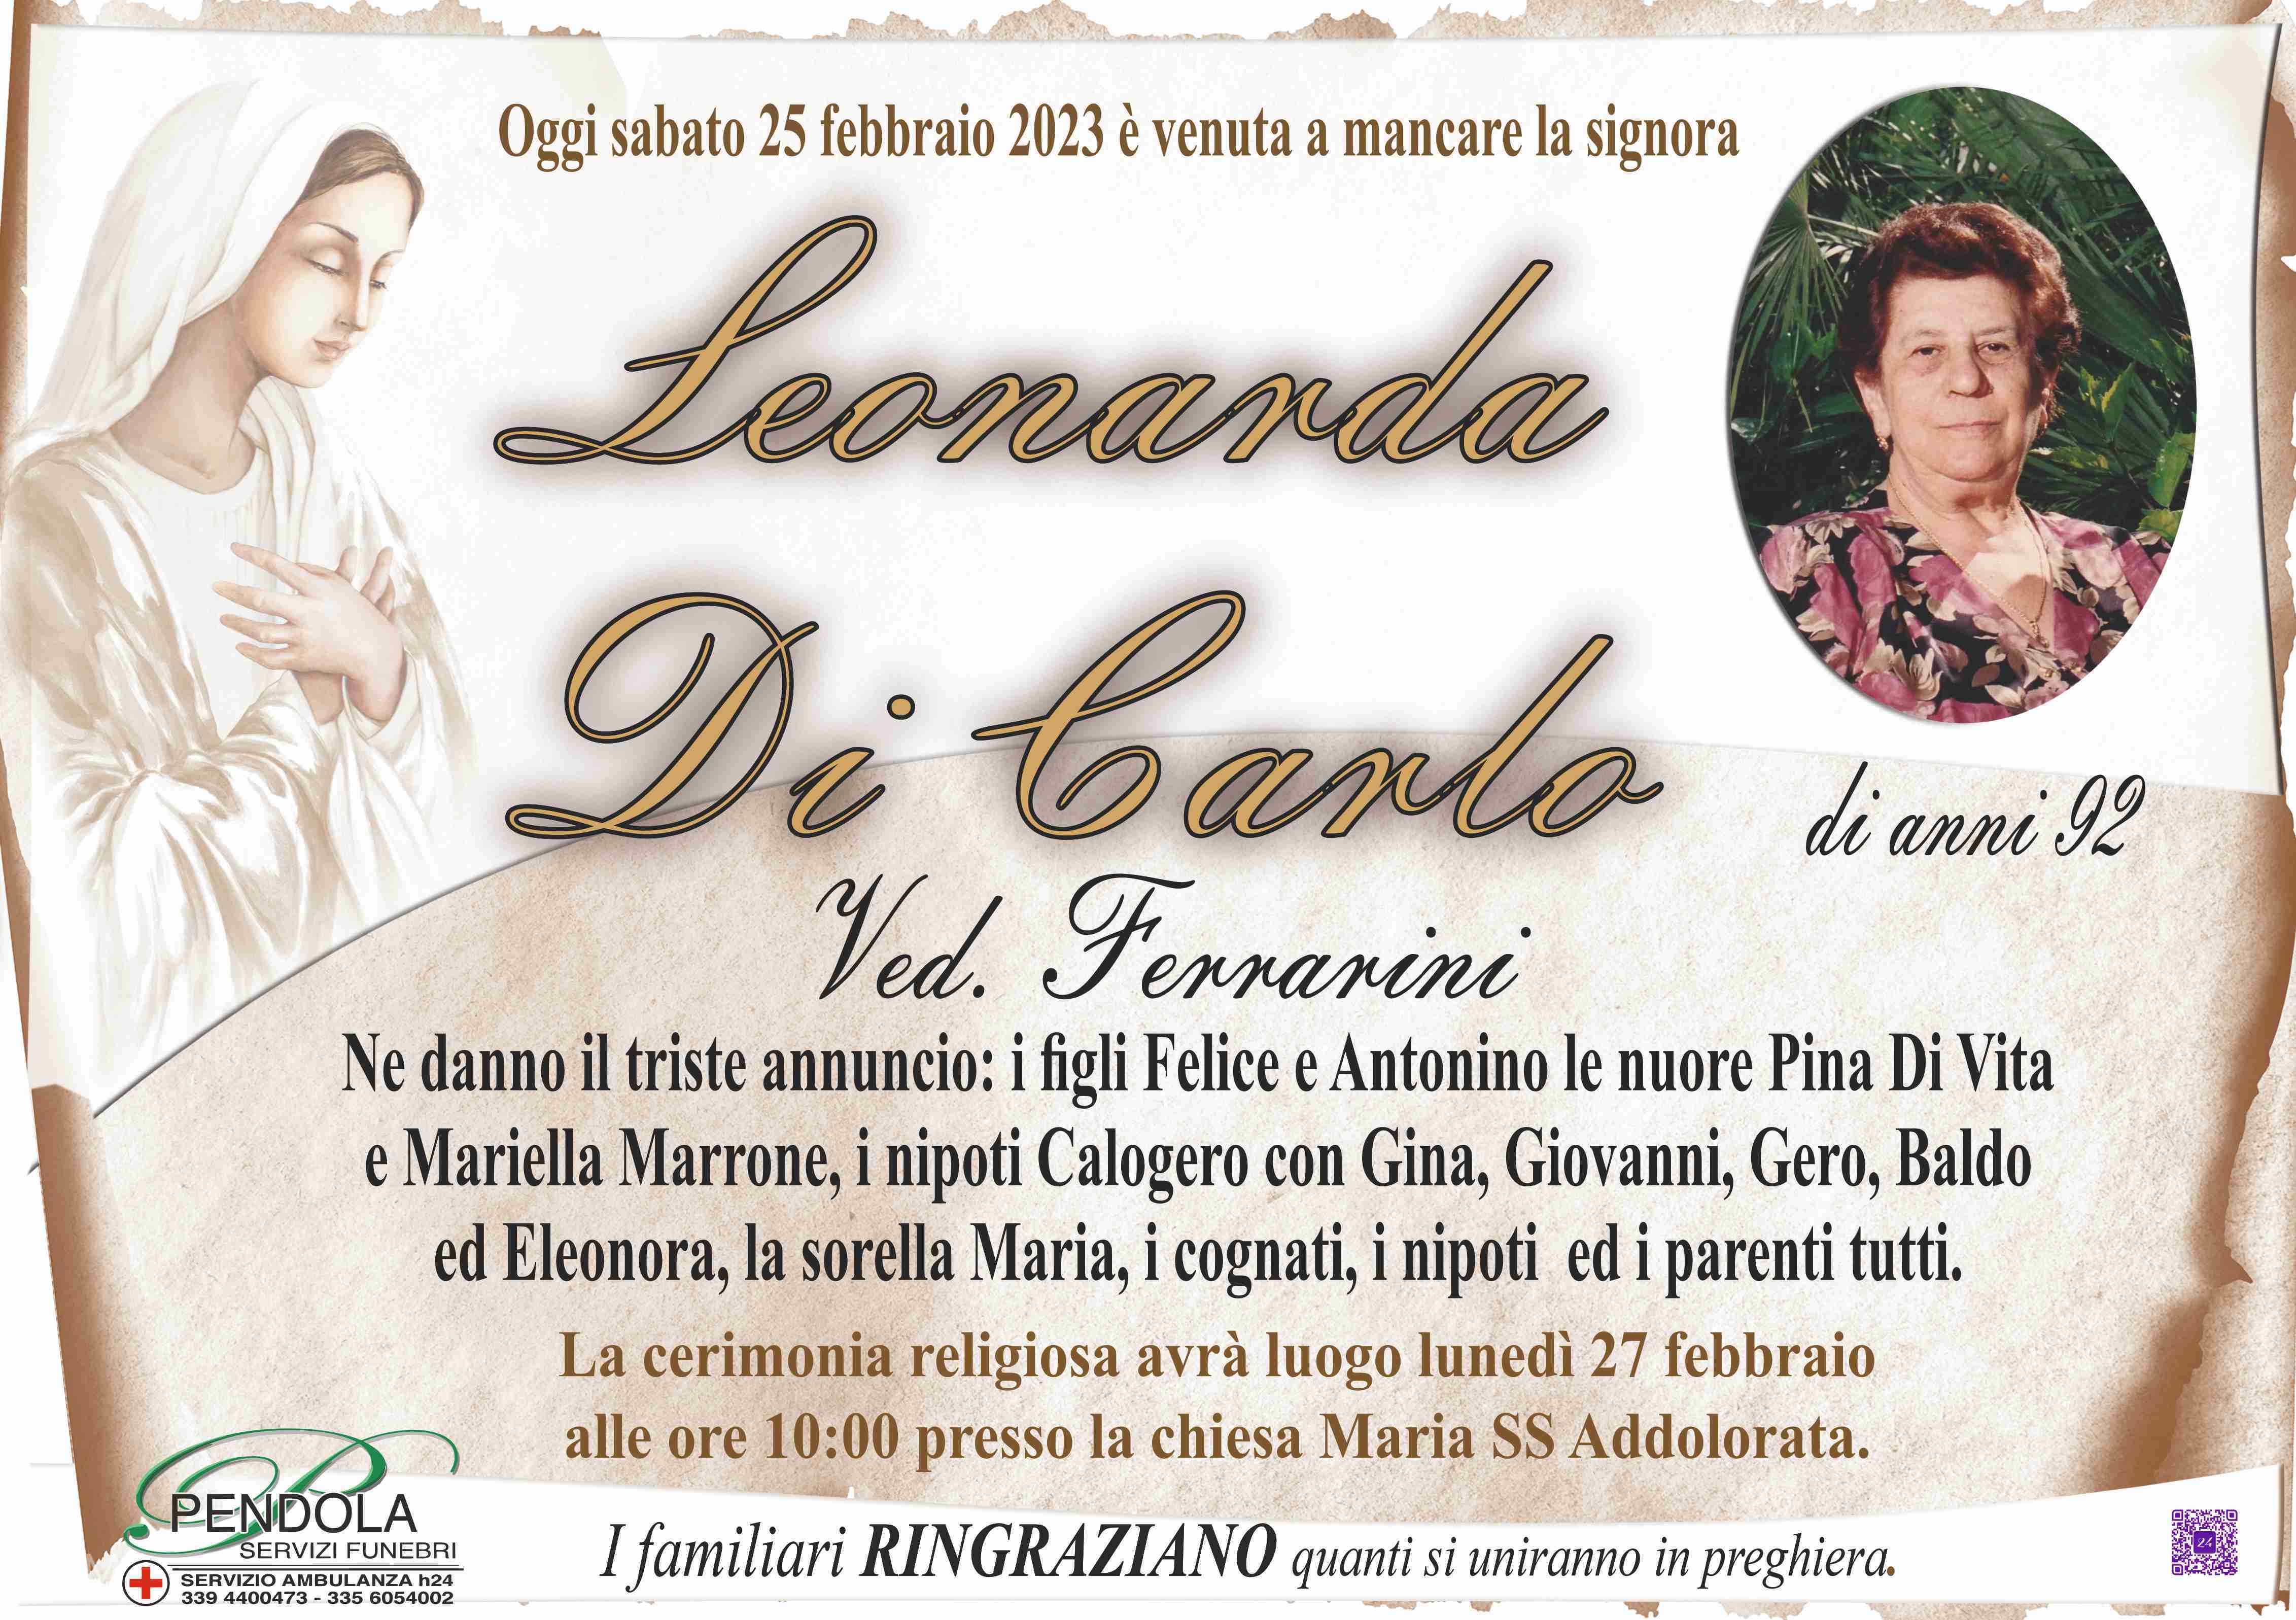 Leonarda Di Carlo